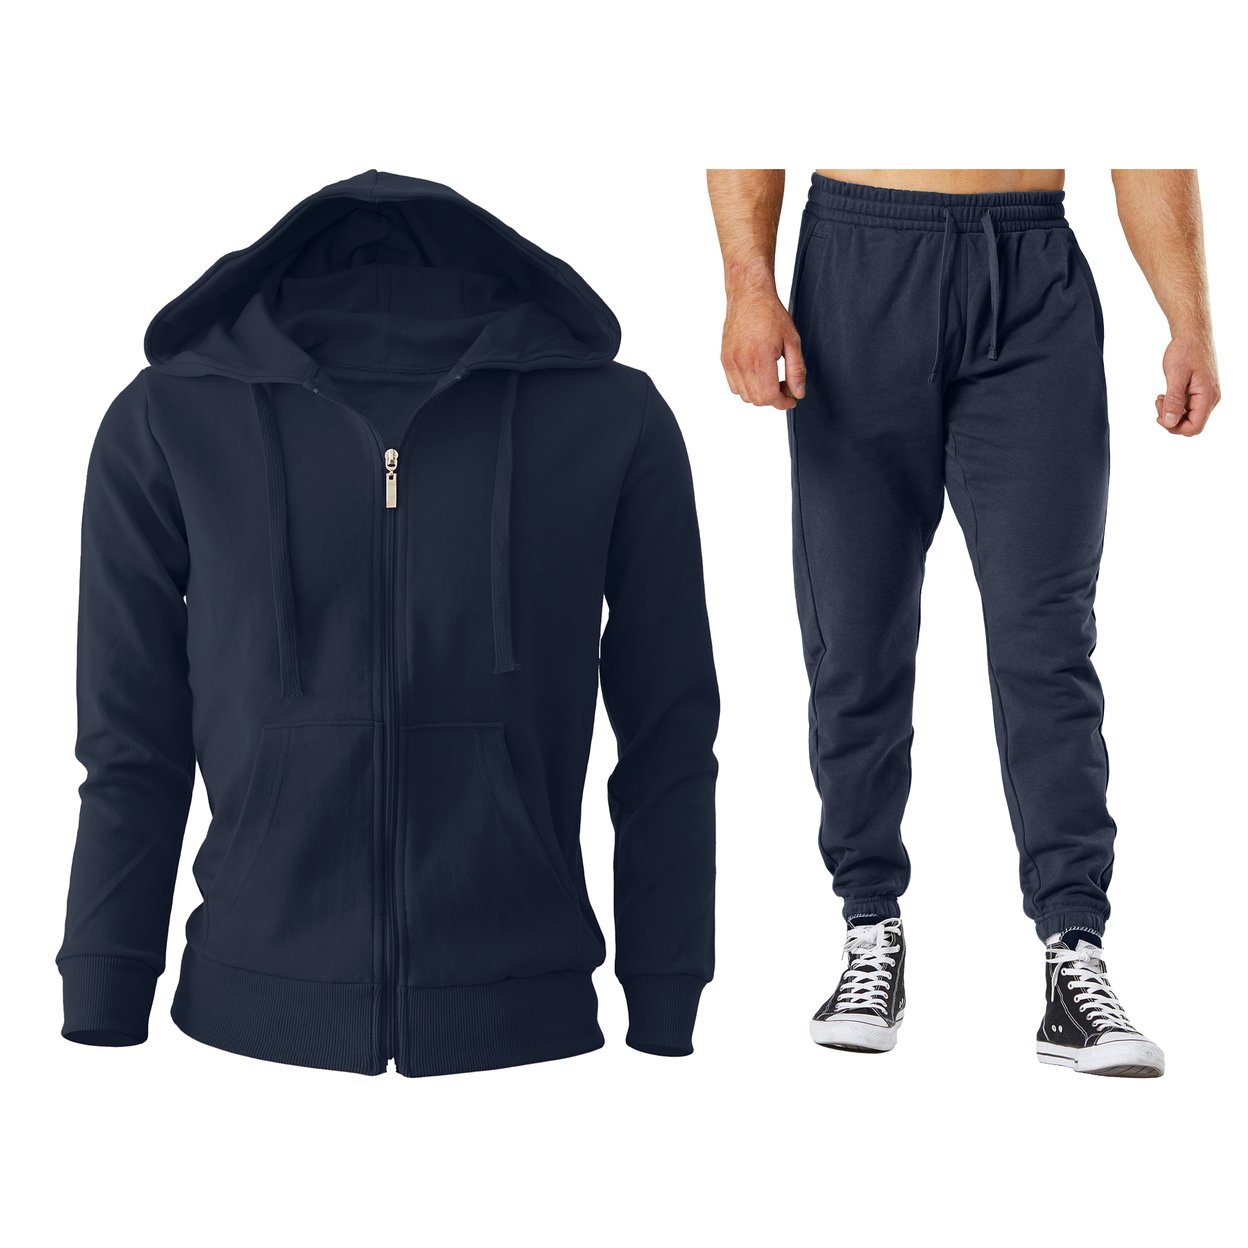 4-Piece: Men's Winter Warm Cozy Athletic Multi-Pockets BIG & TALL Sweatsuit Set - Charcoal, Large